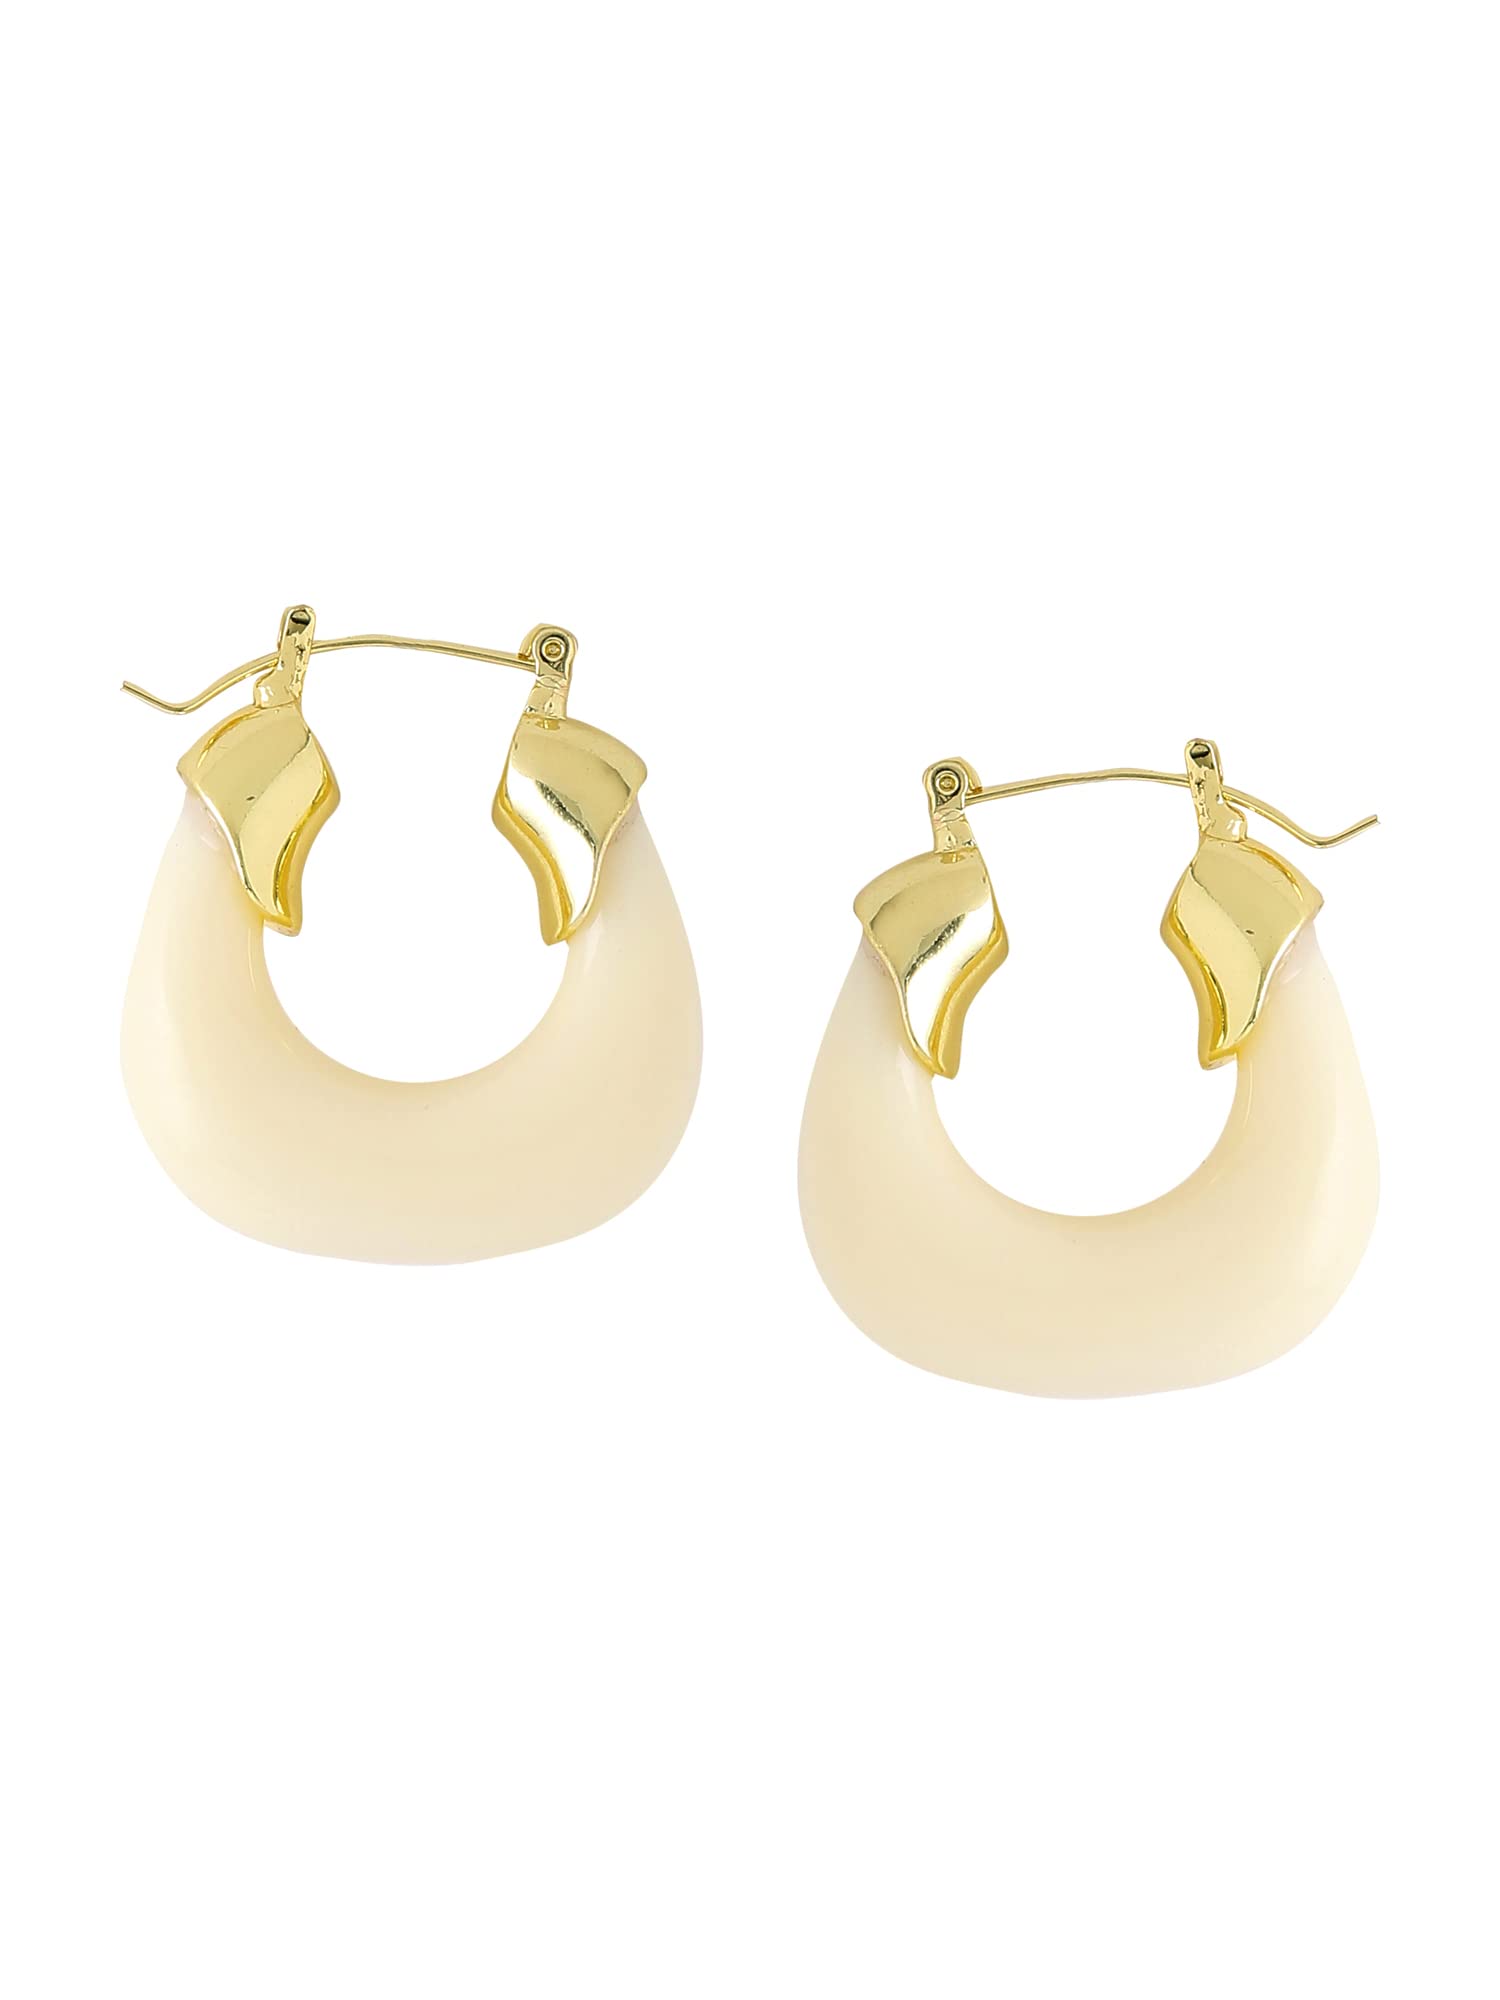 Yellow Chimes Earrings for Women and Girls Fashion Hoops for Girls| Gold Tone Hoop Earrings | Birthday Gift for girls and women Anniversary Gift for Wife